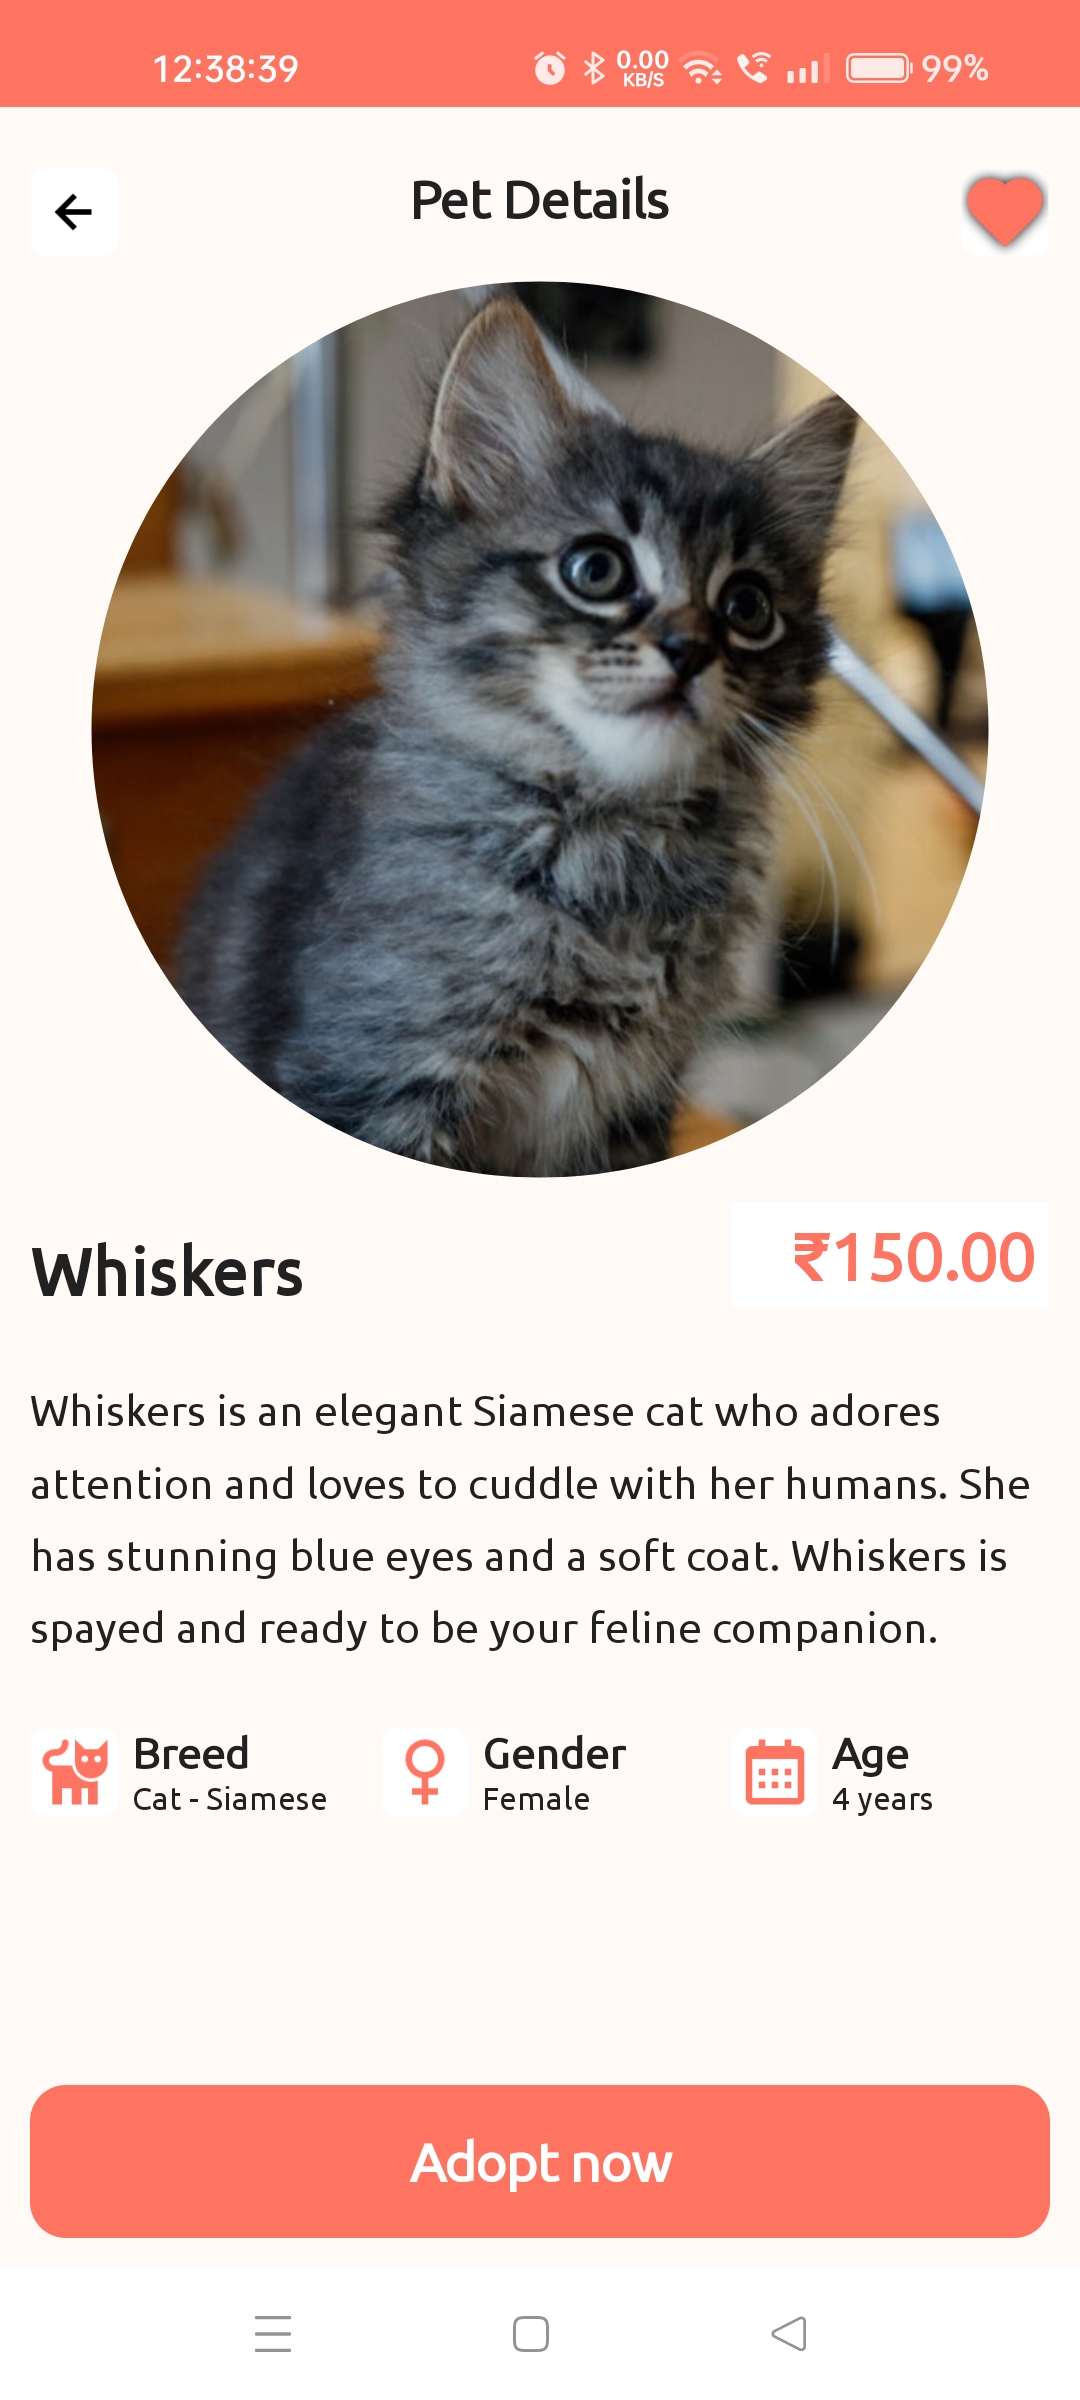 GitHub - UddeshJain/adopt-me: This web app allow users to adopt a